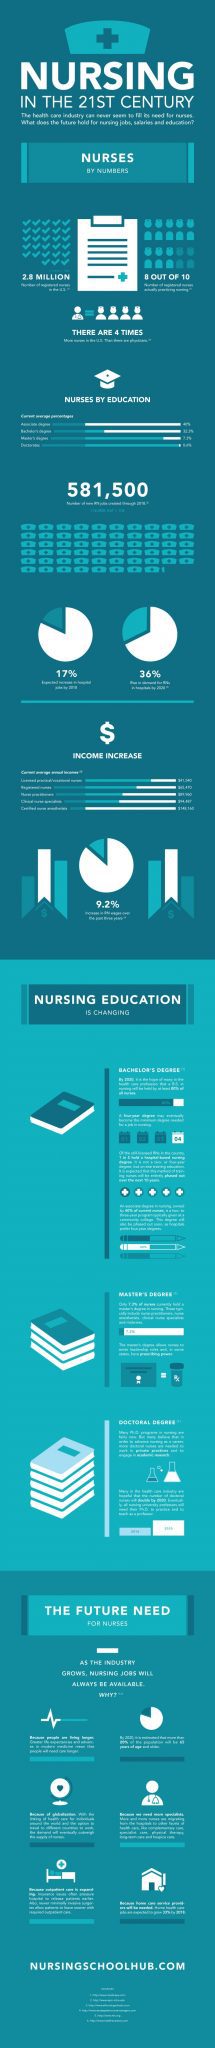 Nursing in the 21st Century - main infographic